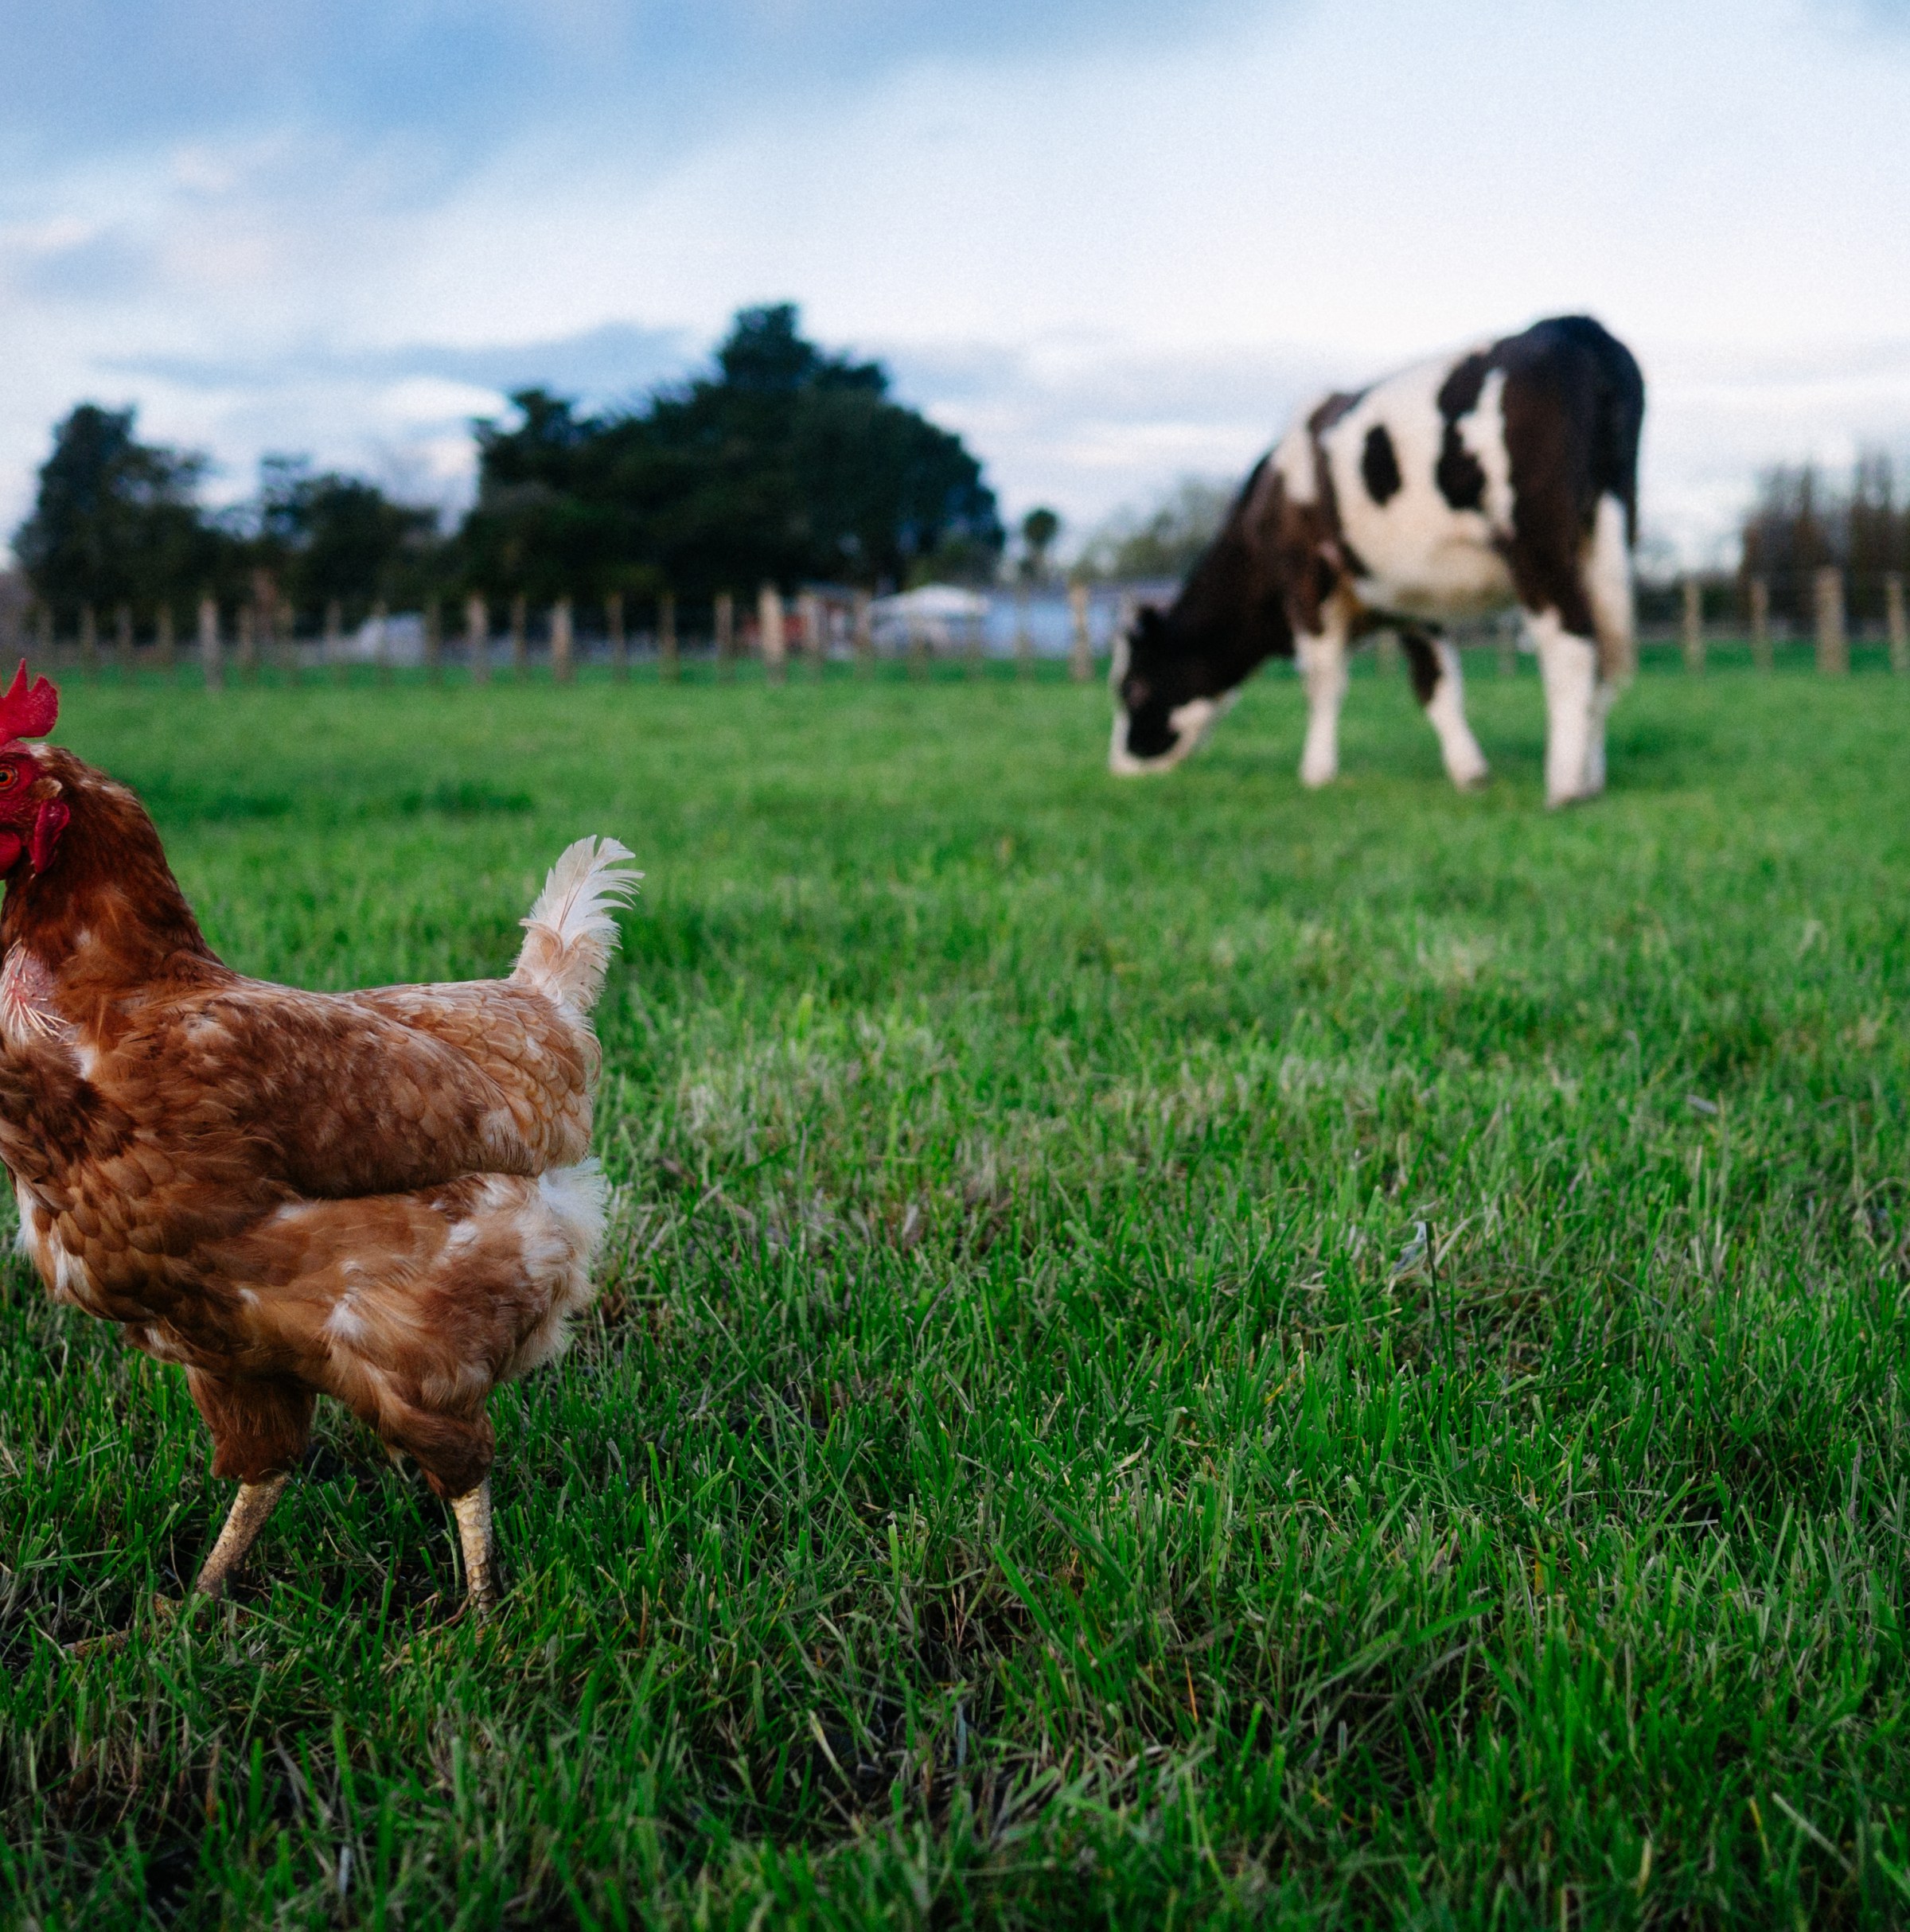 Bird flu in cows — and now in milk. How worried should we be?